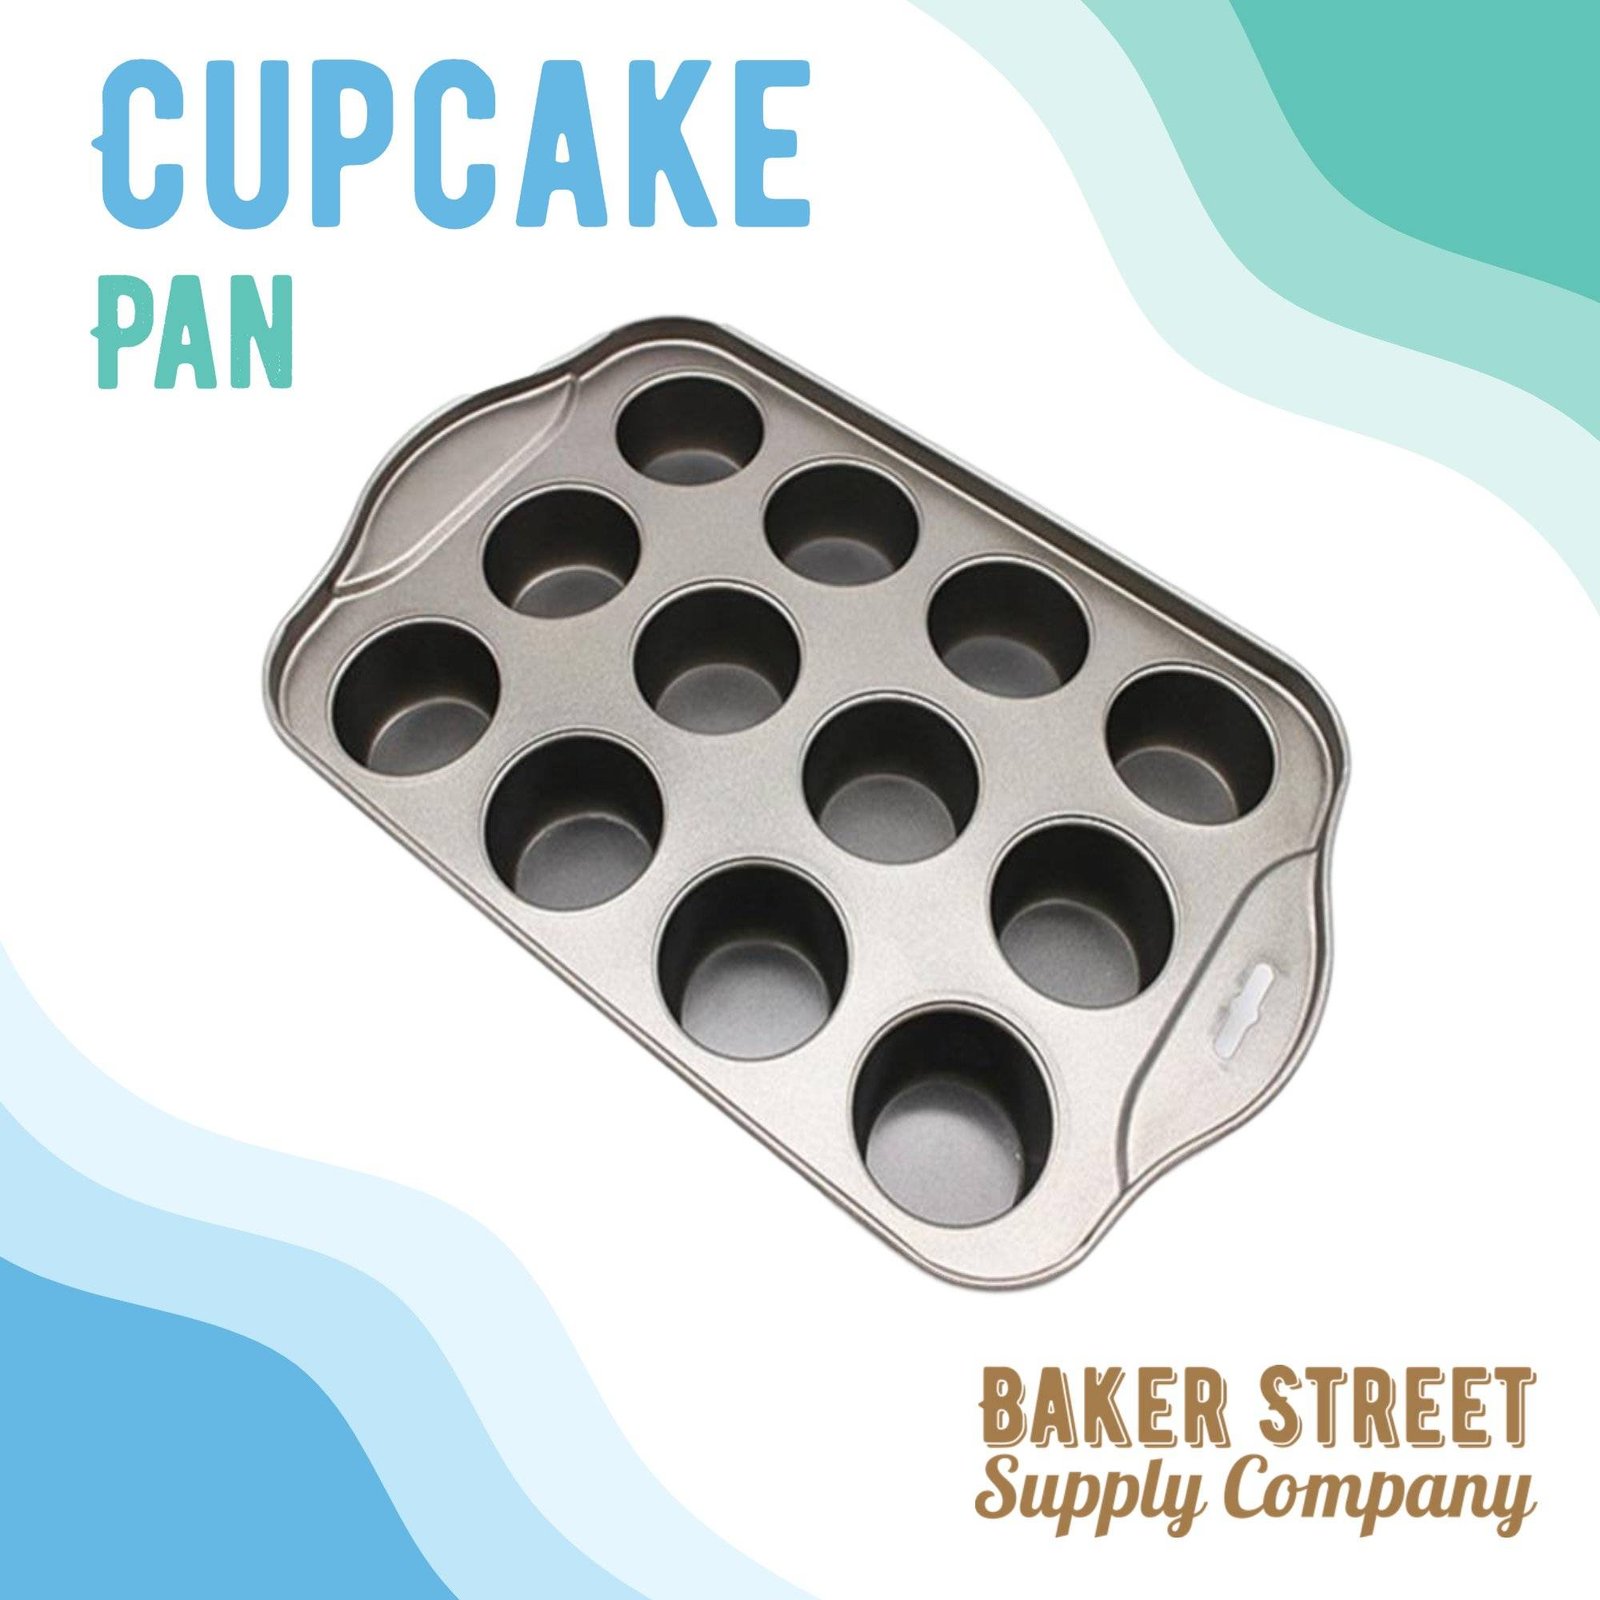 https://bakerstreetsupply.com/wp-content/uploads/2020/06/cupcake-pan.jpg